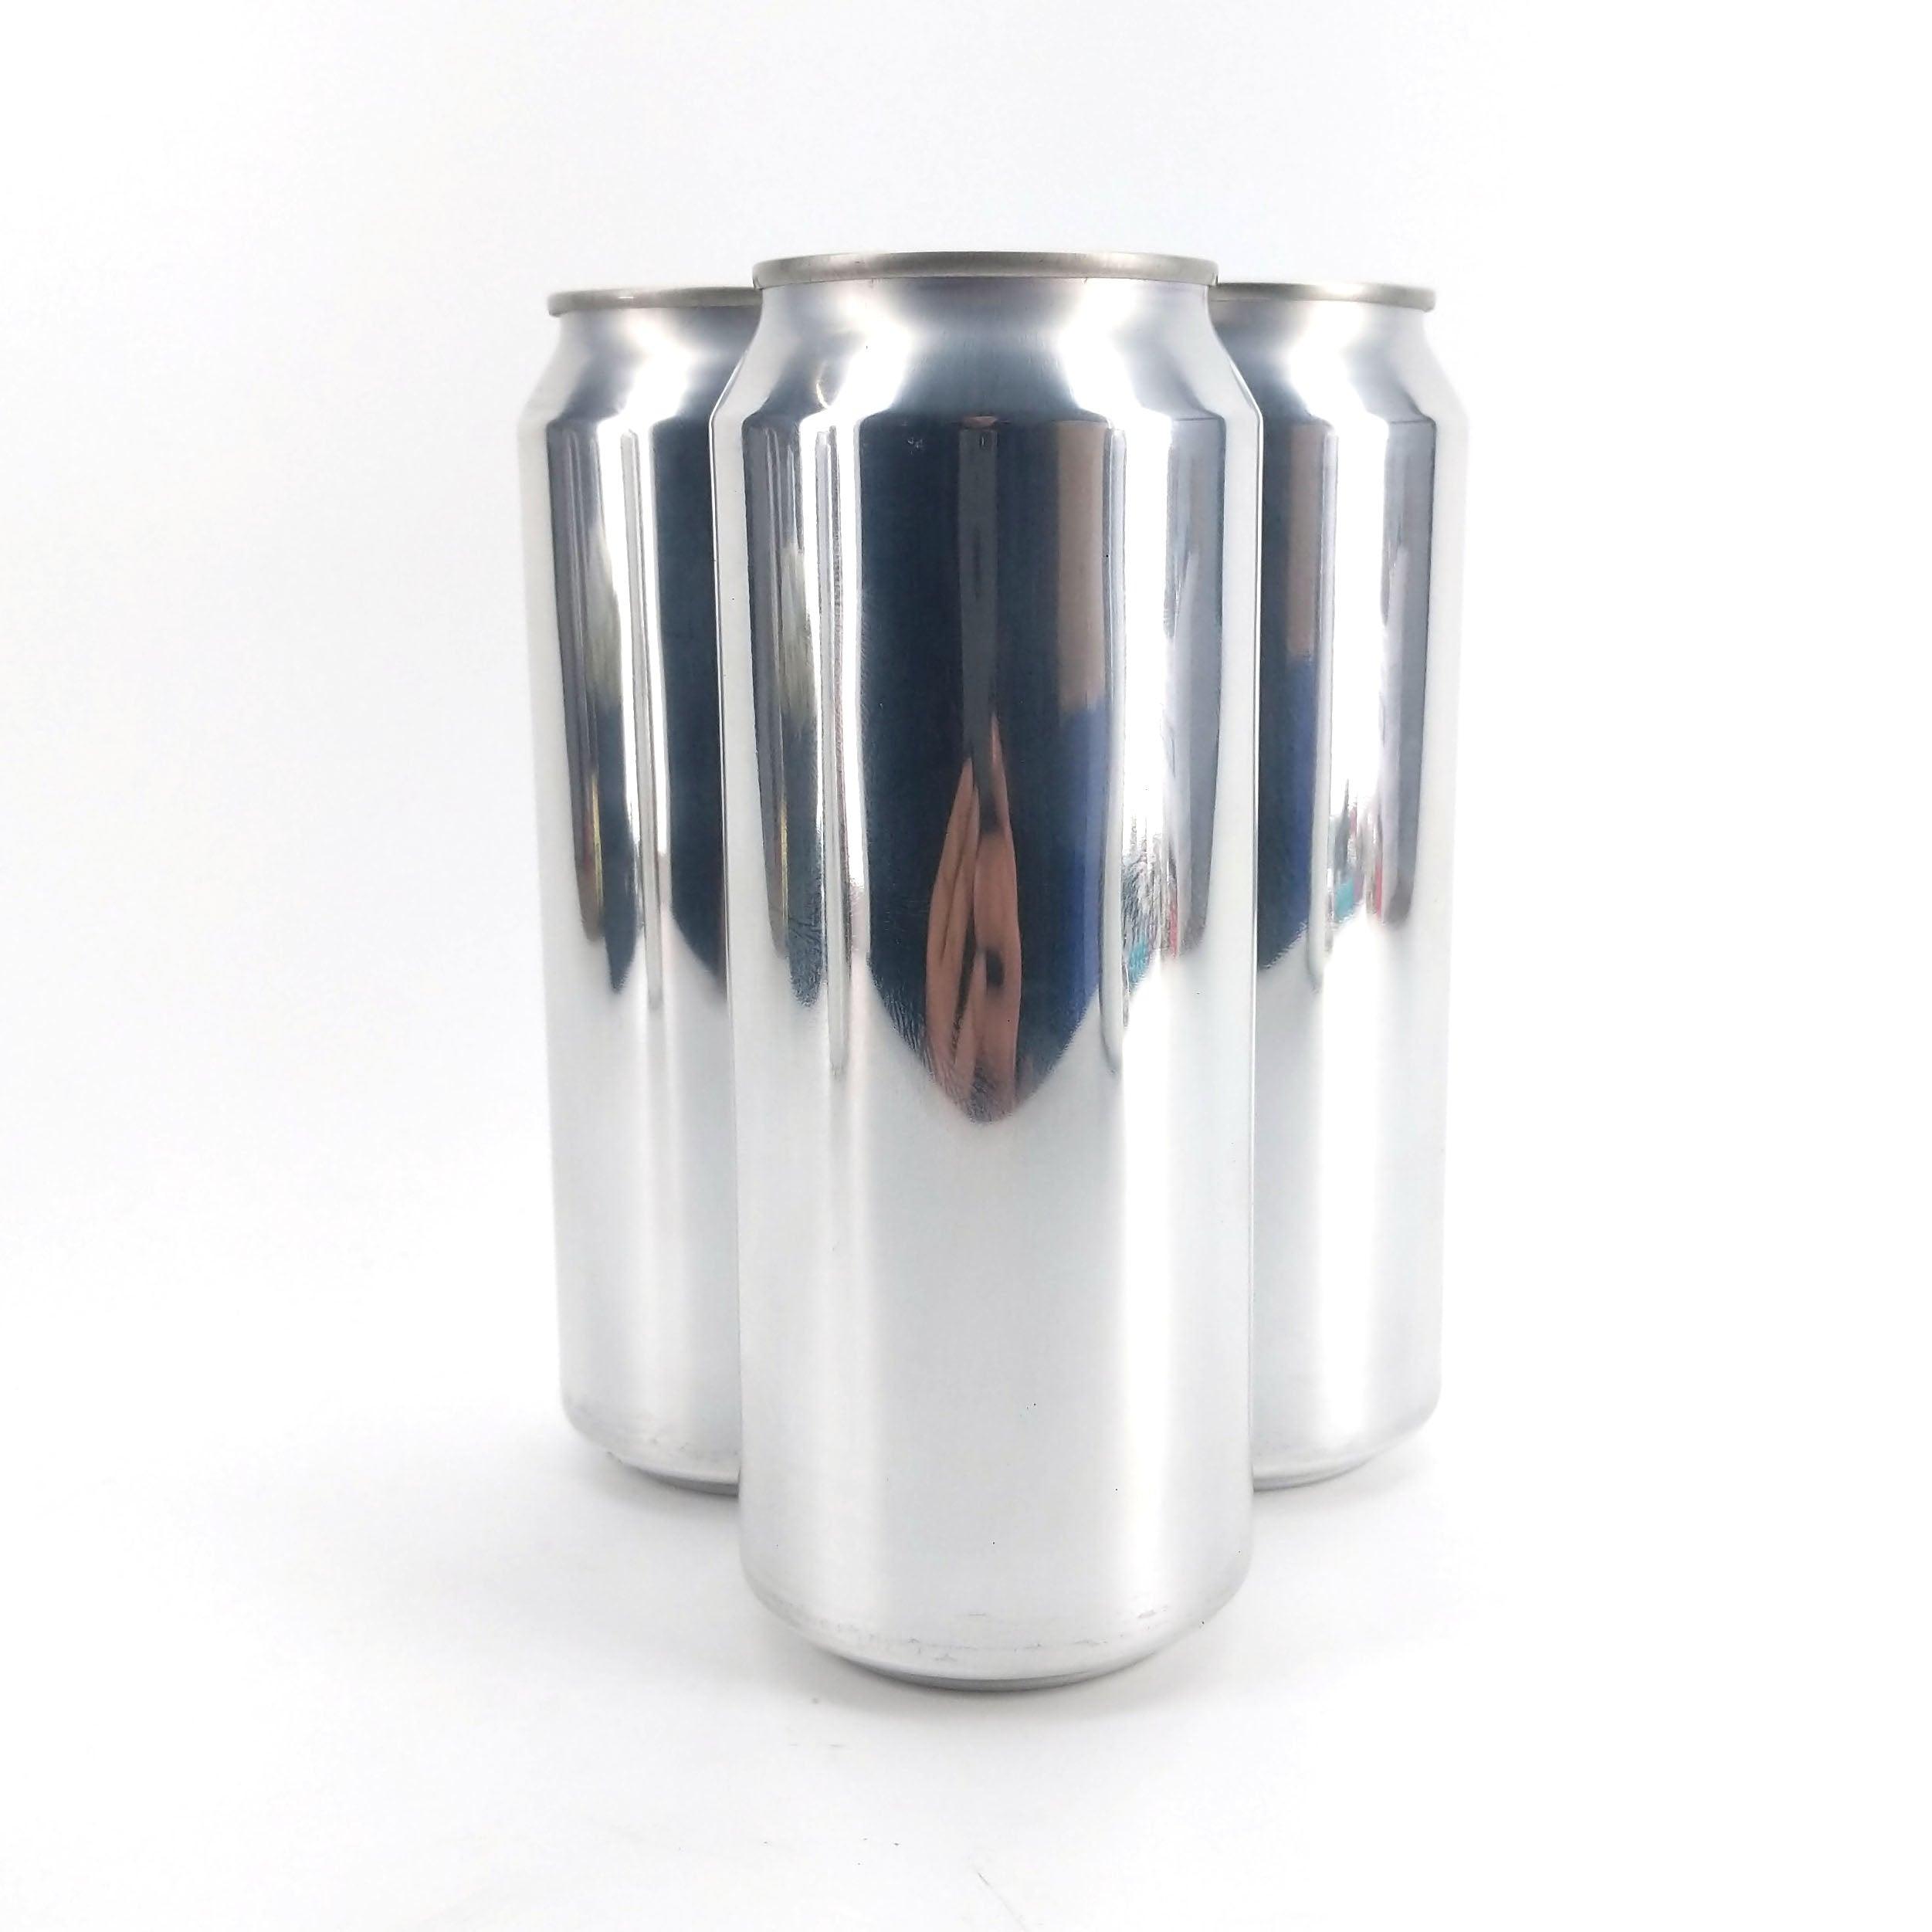 Can Fresh - 500mL Full Aperture - Silver - Aluminium Cans - 207 units - KegLand